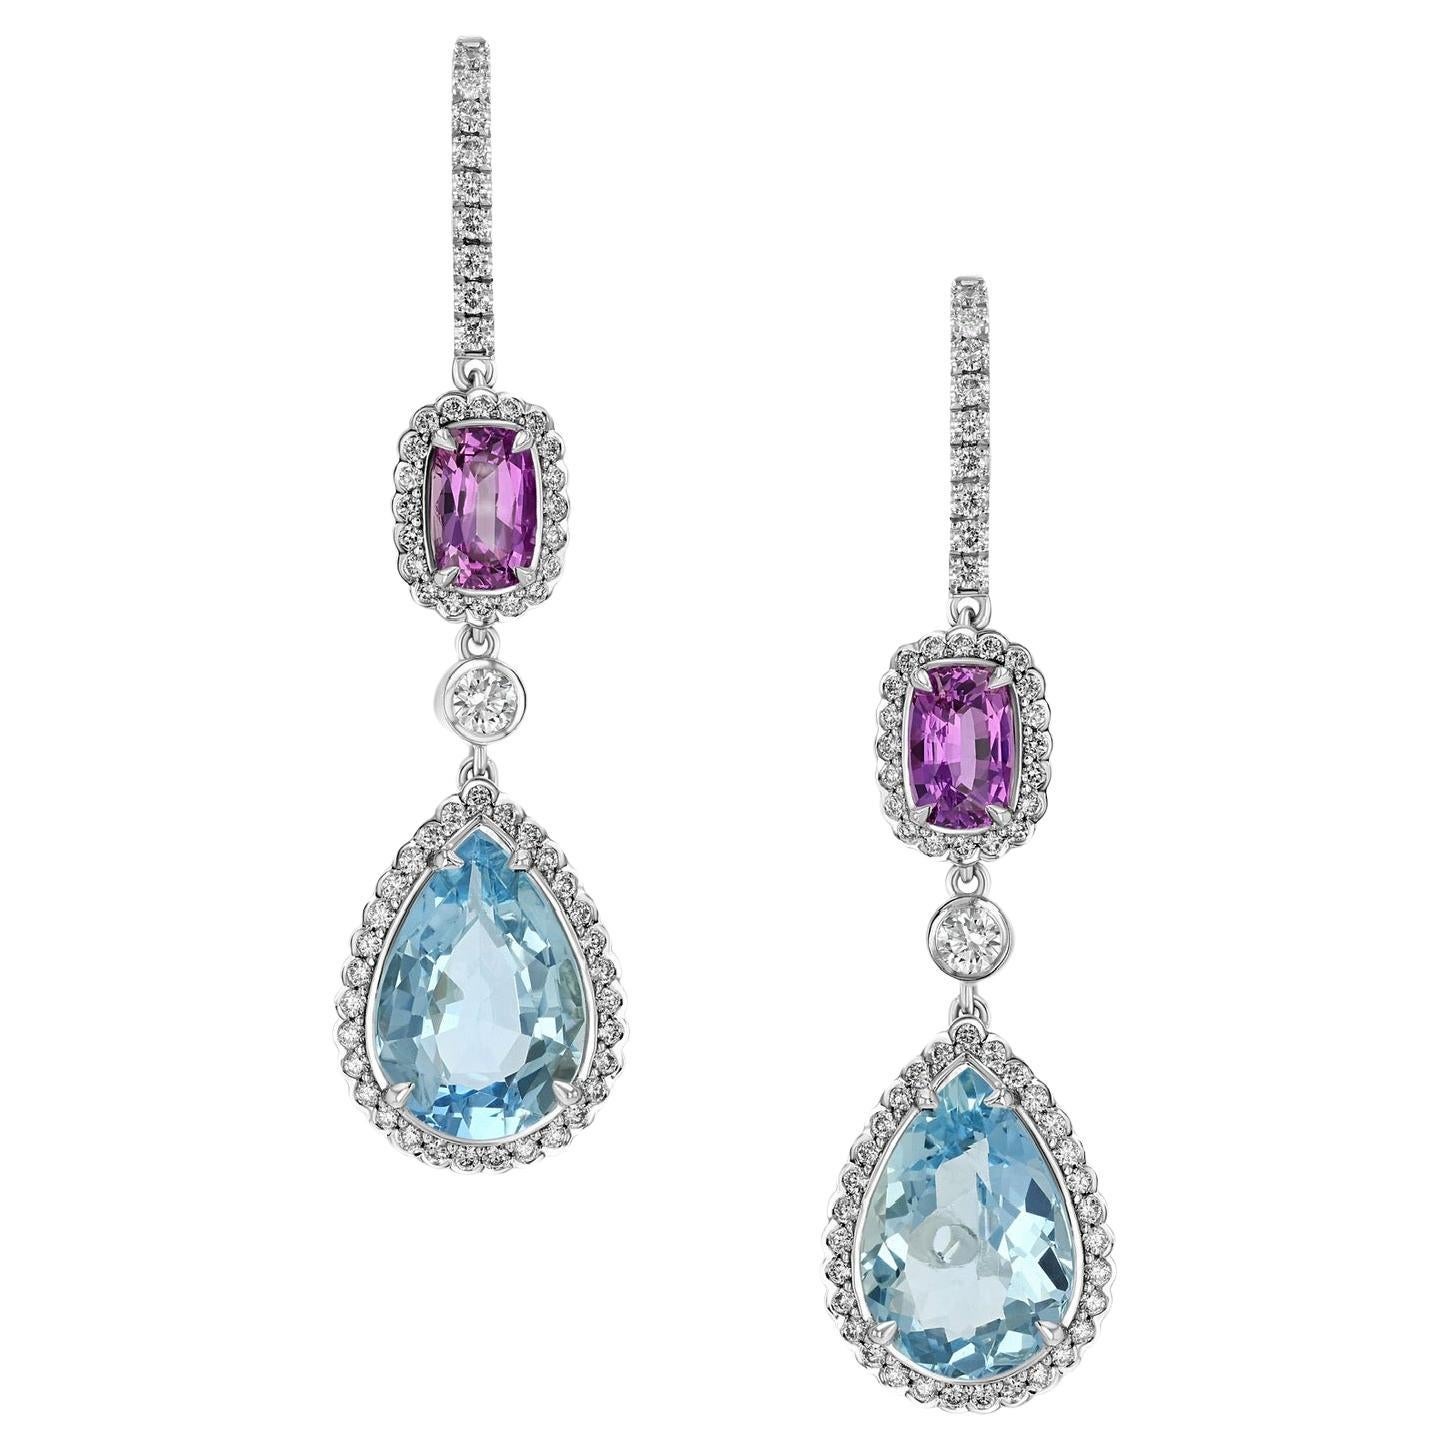 9.71ct pear-cut Aquamarine, 2.83ct Pink Sapphire, 1.32ct Diamond, 18K earrings.